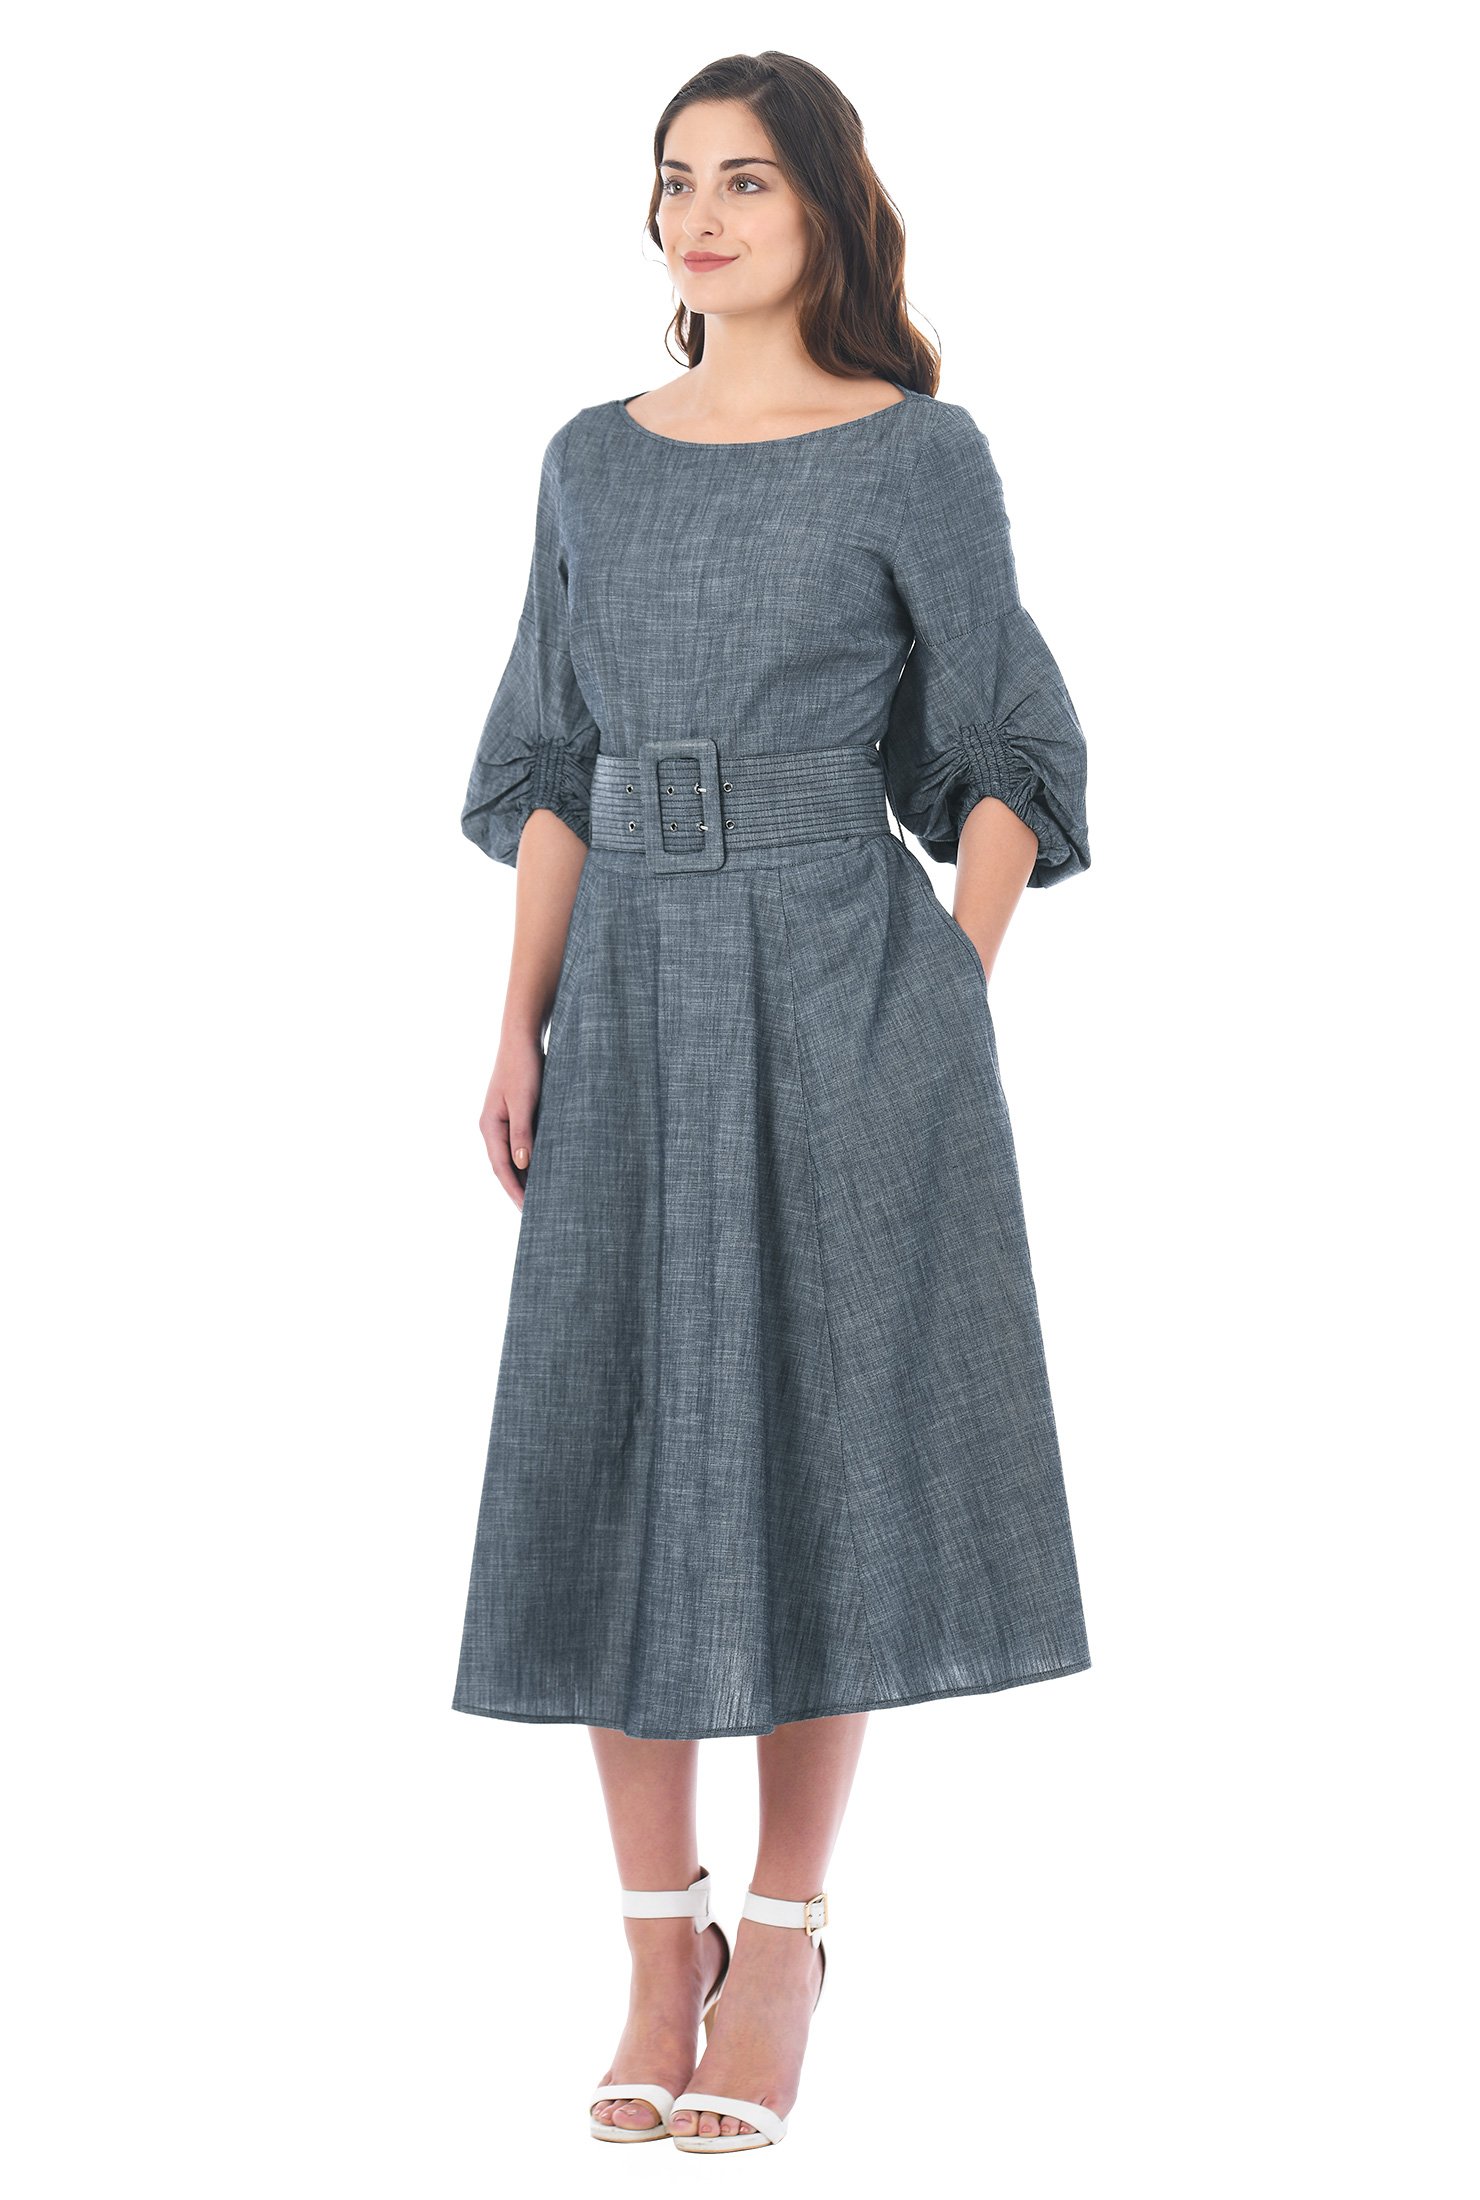 Shop Bell sleeve cotton chambray dress | eShakti